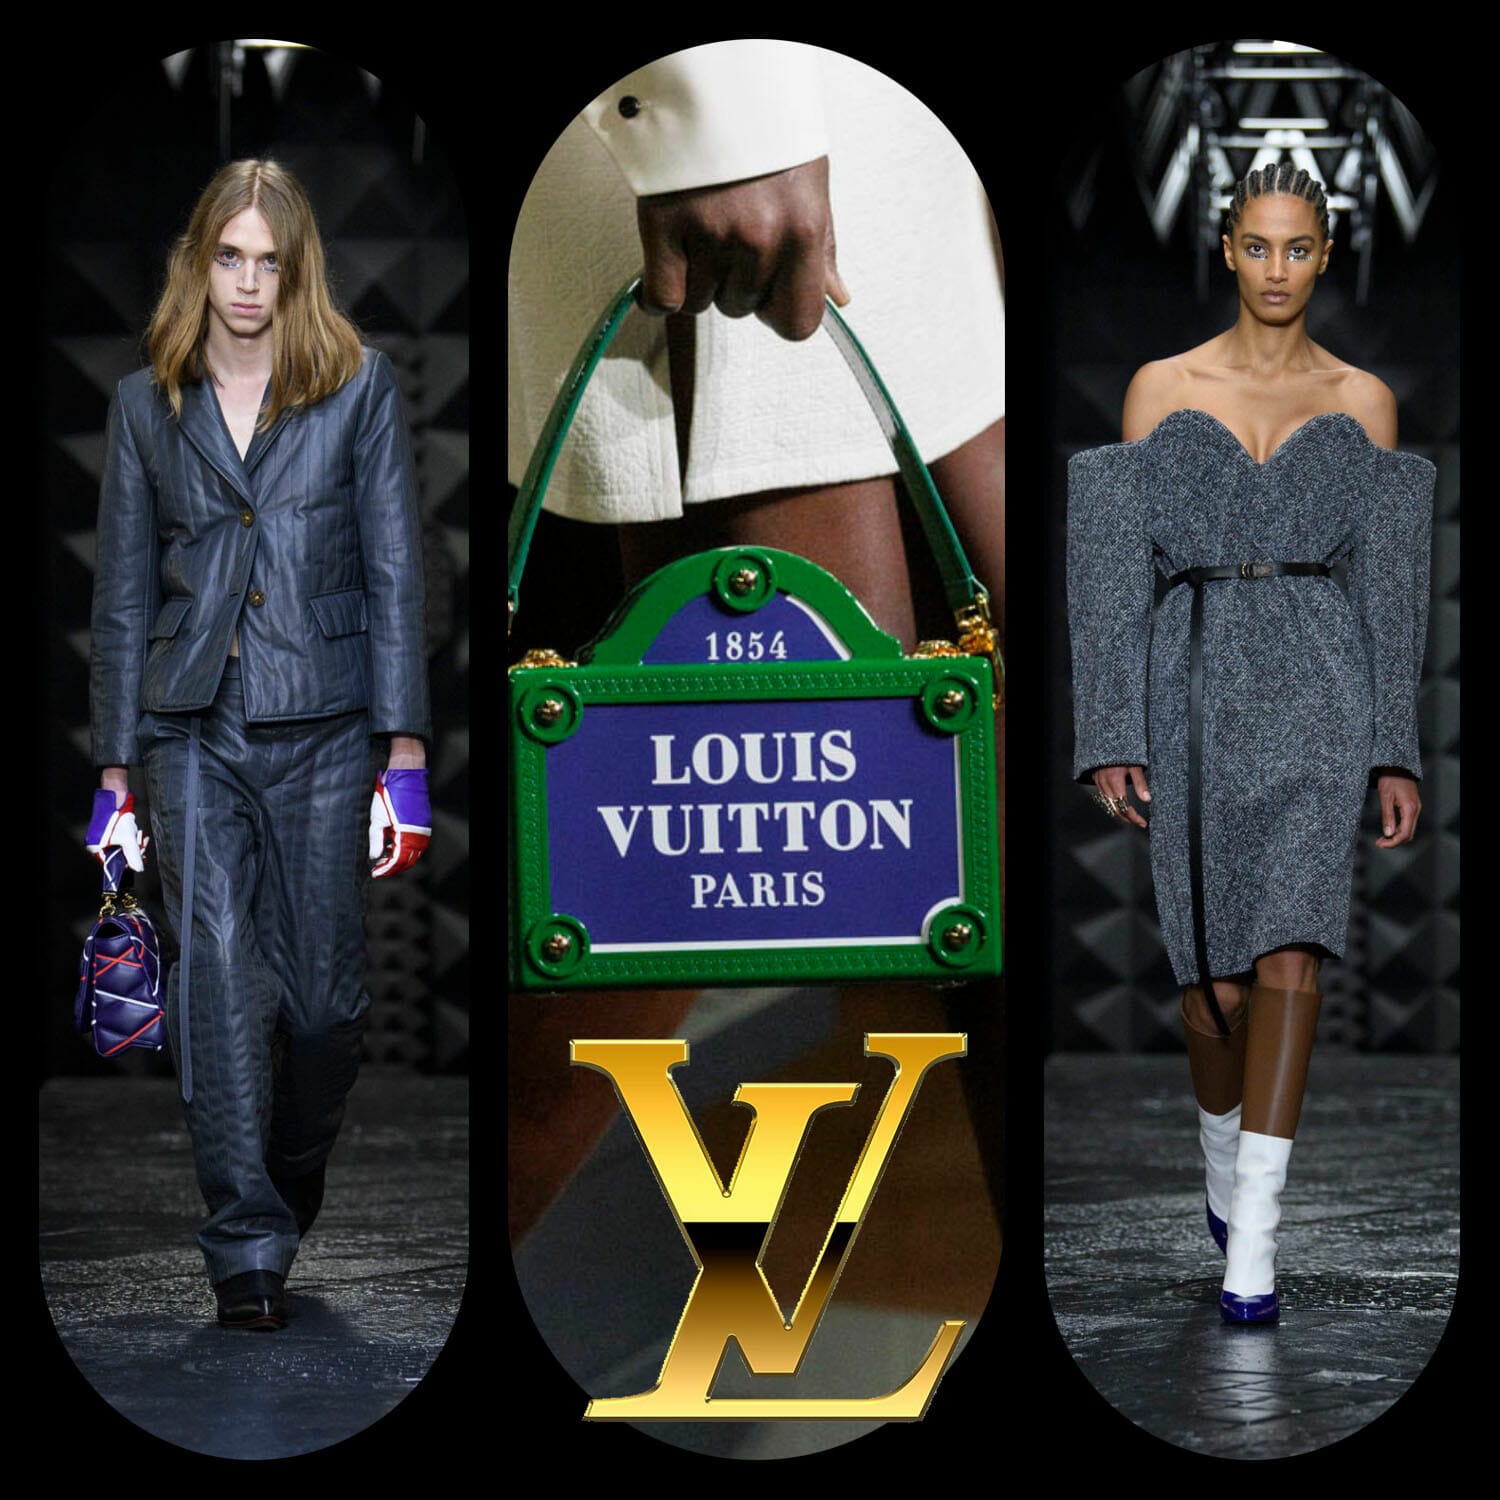 Louis Vuitton Fall/Winter 2023 Collection